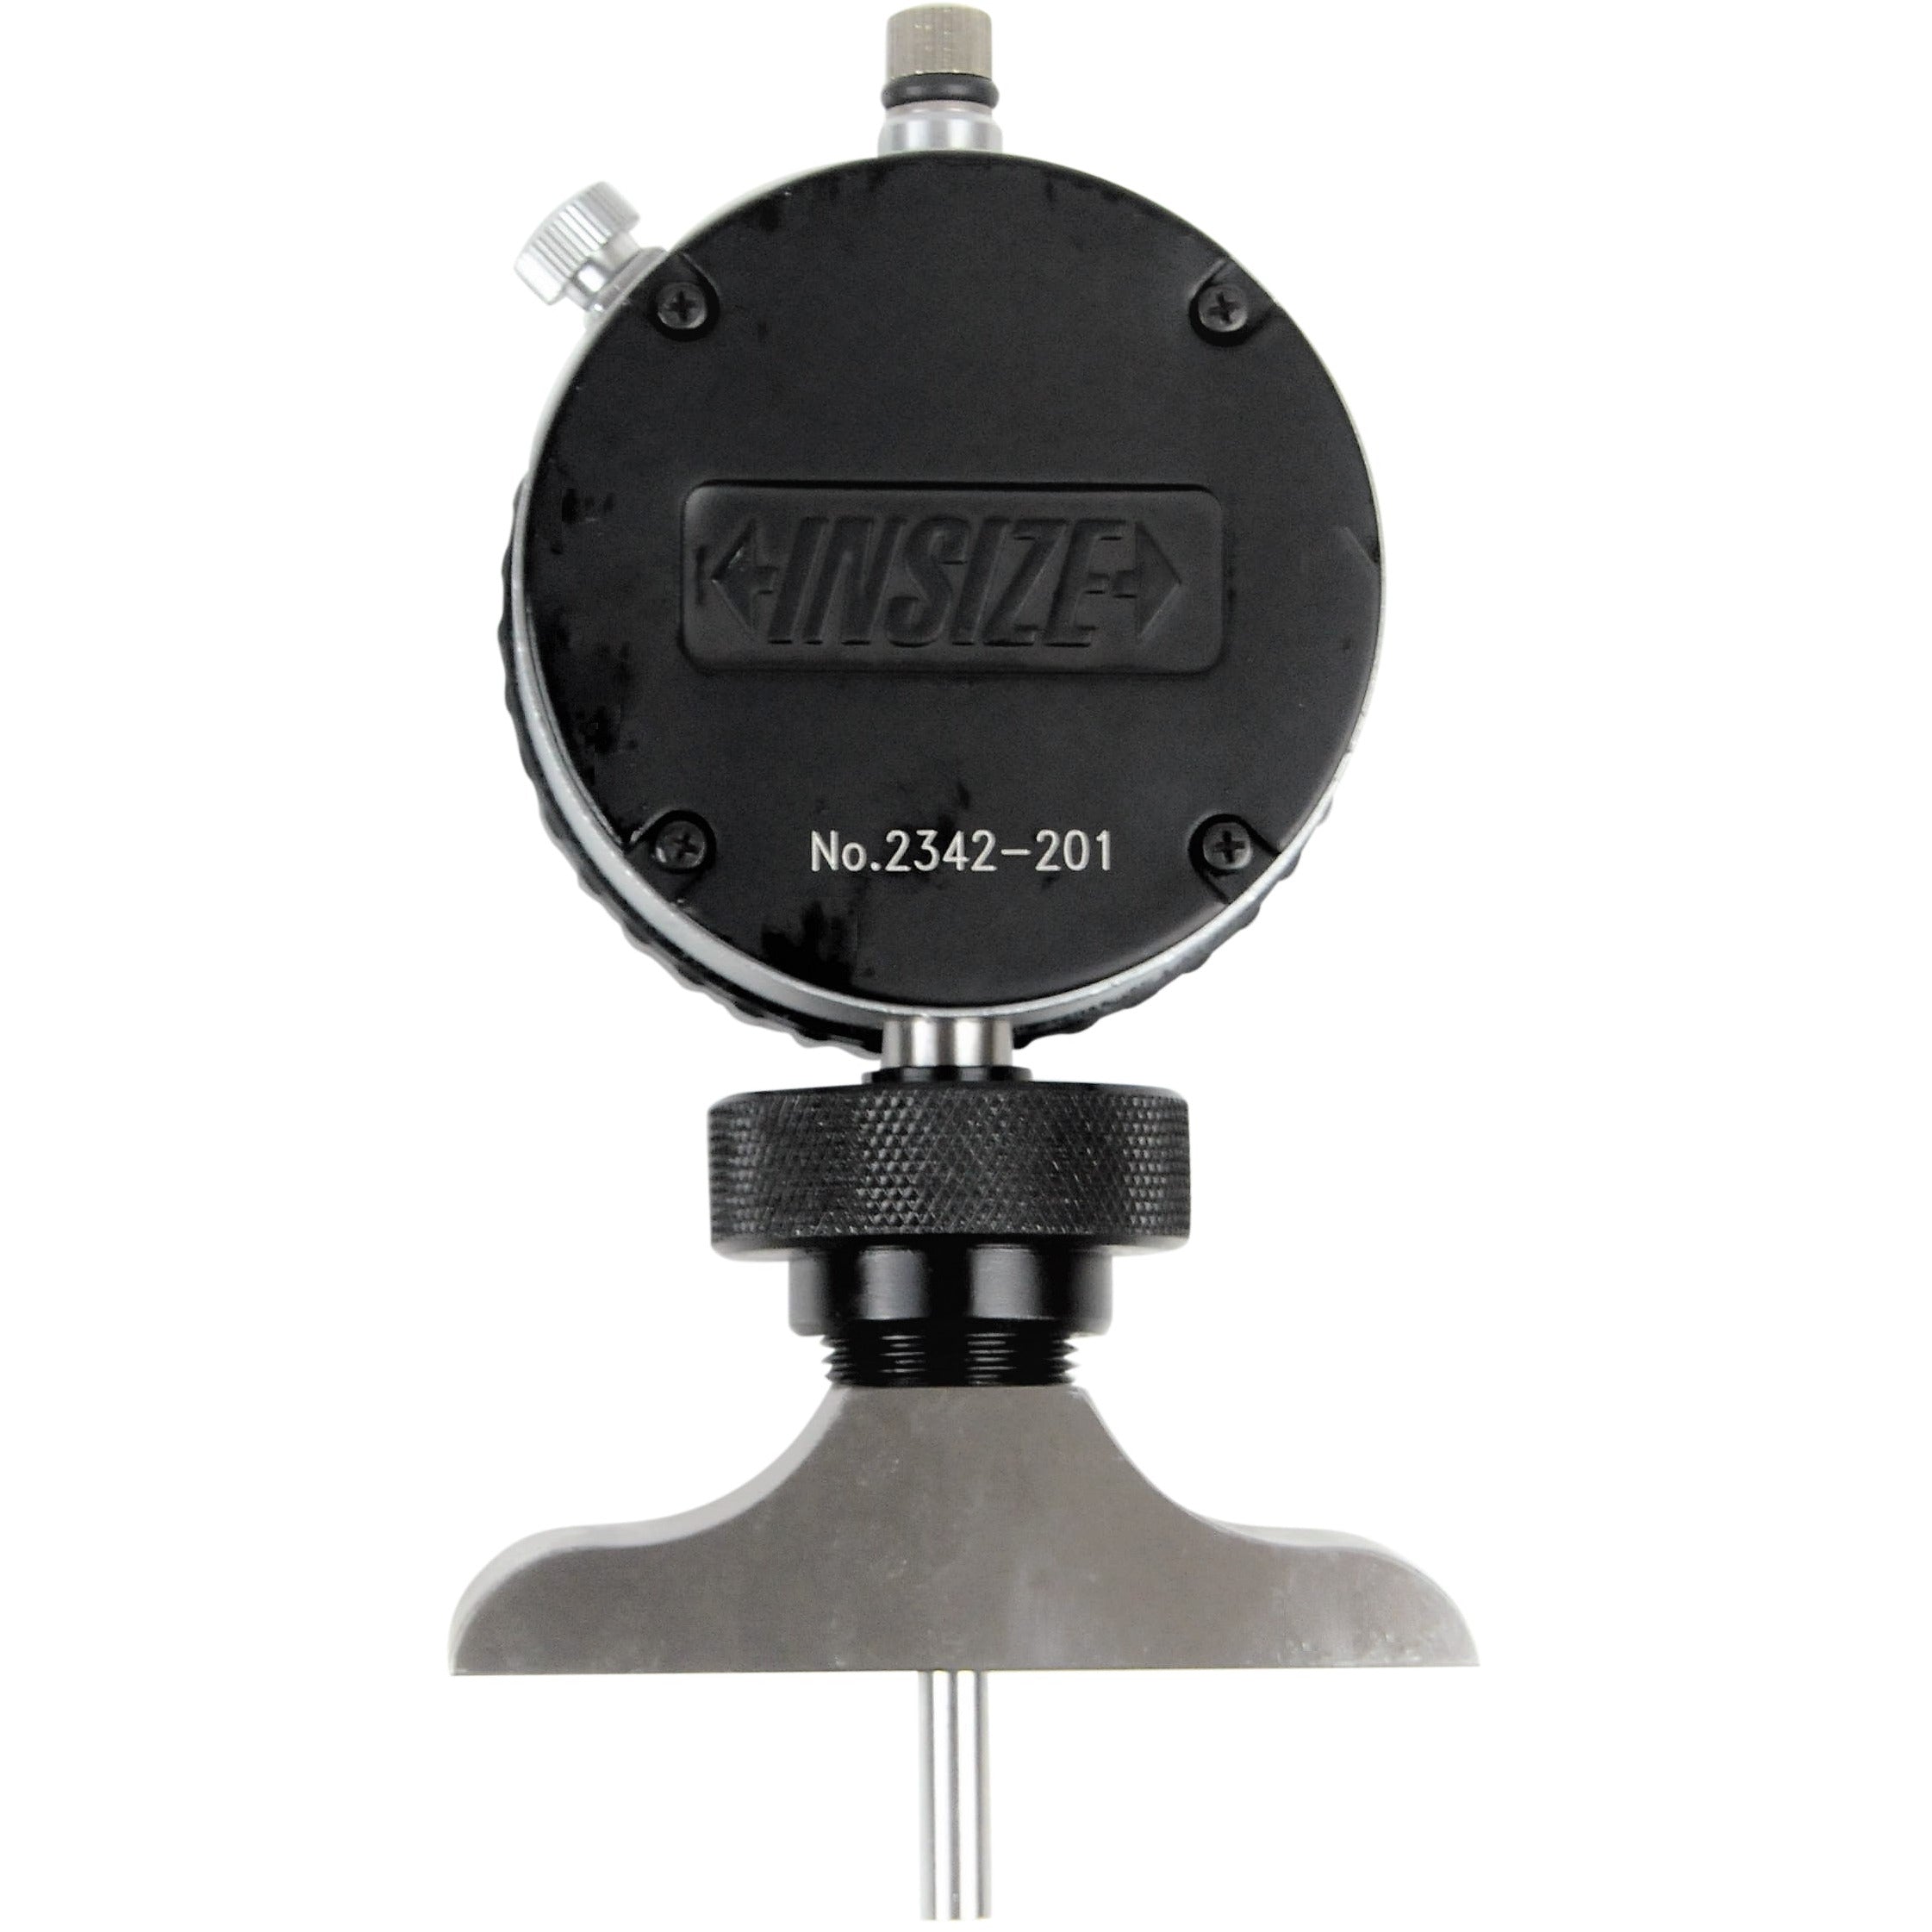 Insize Dial Depth Gauge 0-300mm x 0.01mm Range Series 2342-201